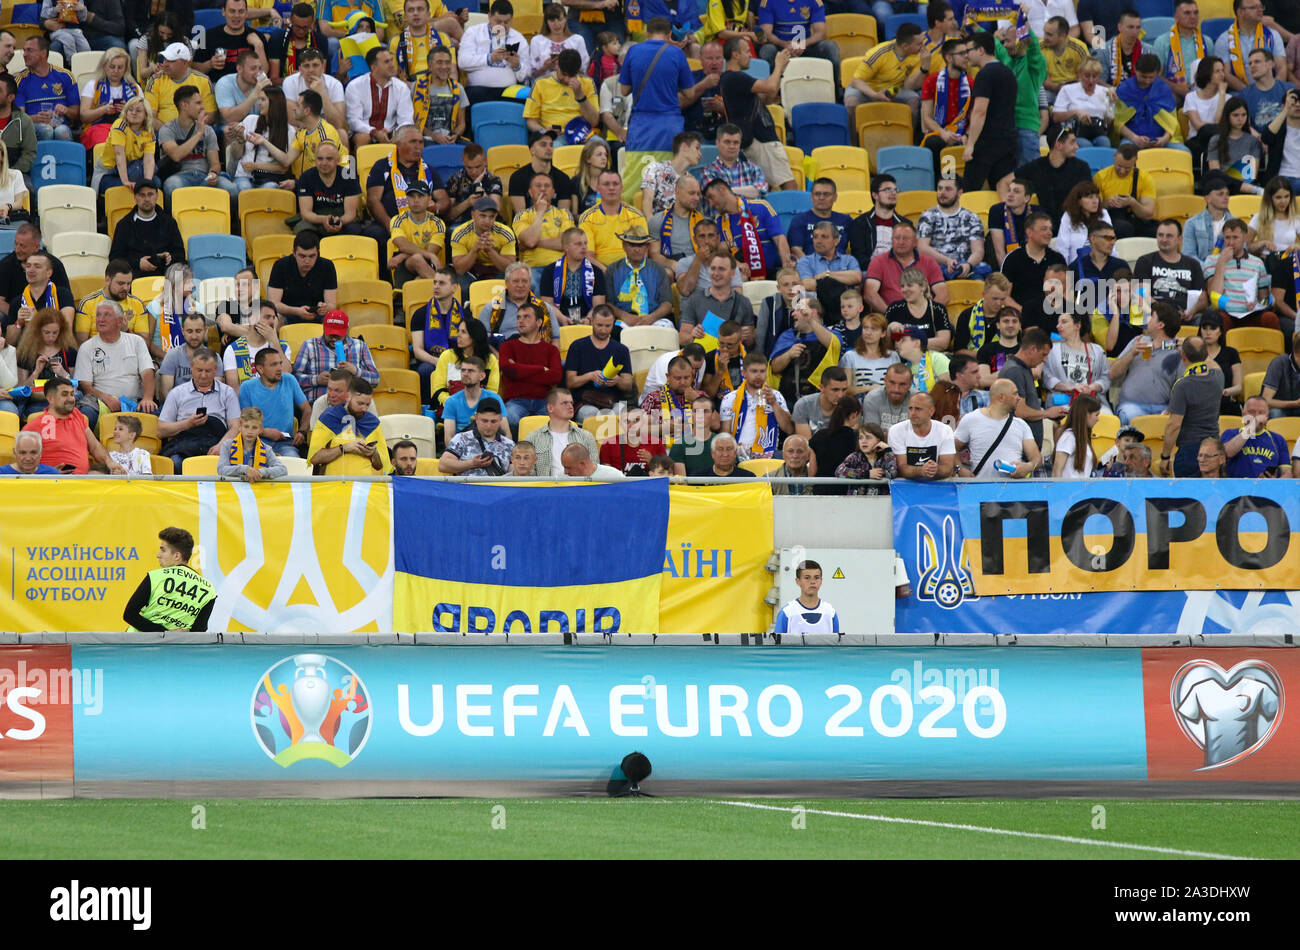 LVIV, UKRAINE - JUNE 7, 2019: UEFA EURO 2020 billboard seen at Arena Lviv stadium during the UEFA EURO 2020 Qualifying game Ukraine v Serbia Stock Photo